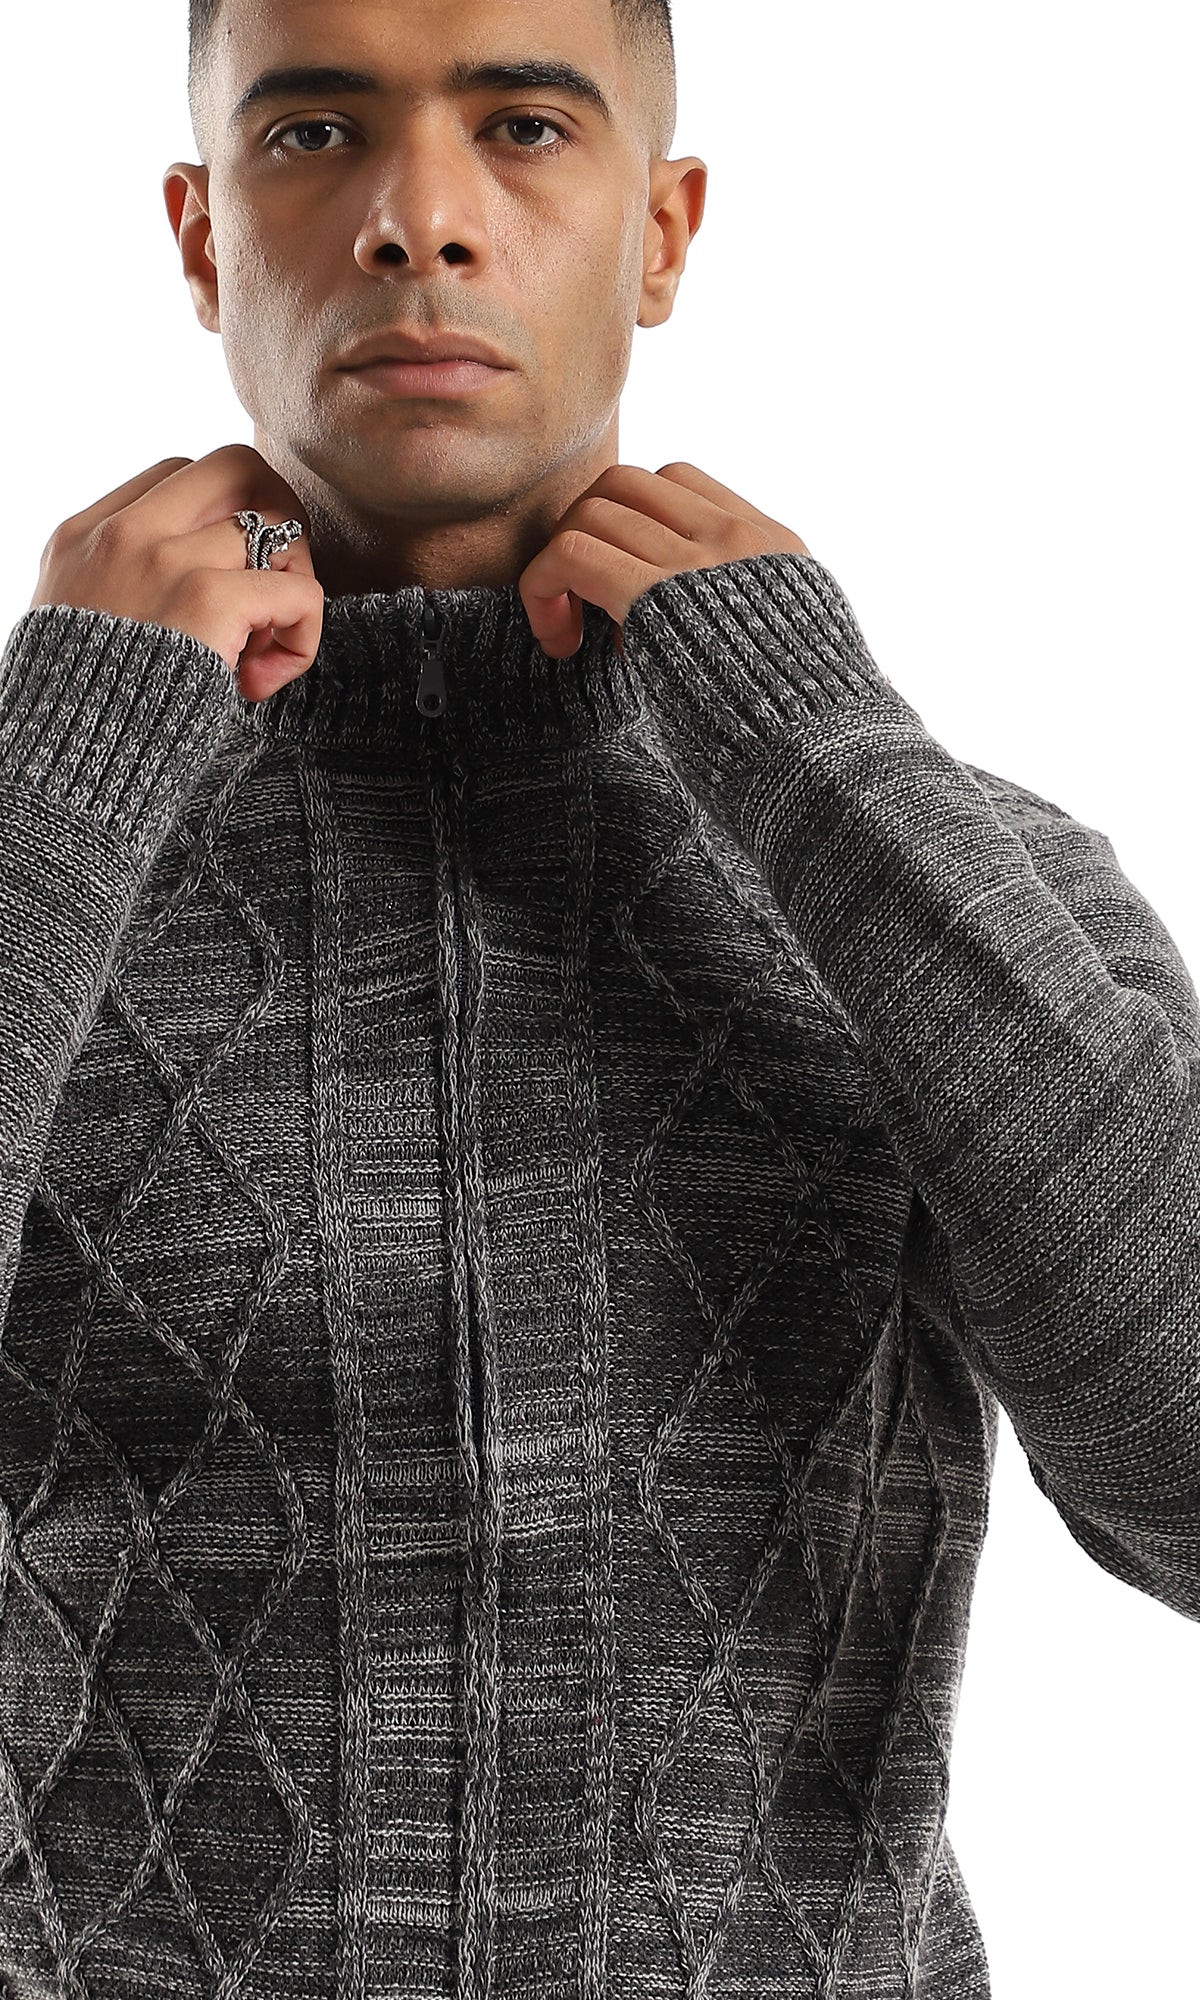 O158766 Cozy Zip Through Neck Heather Dark Grey Sweater